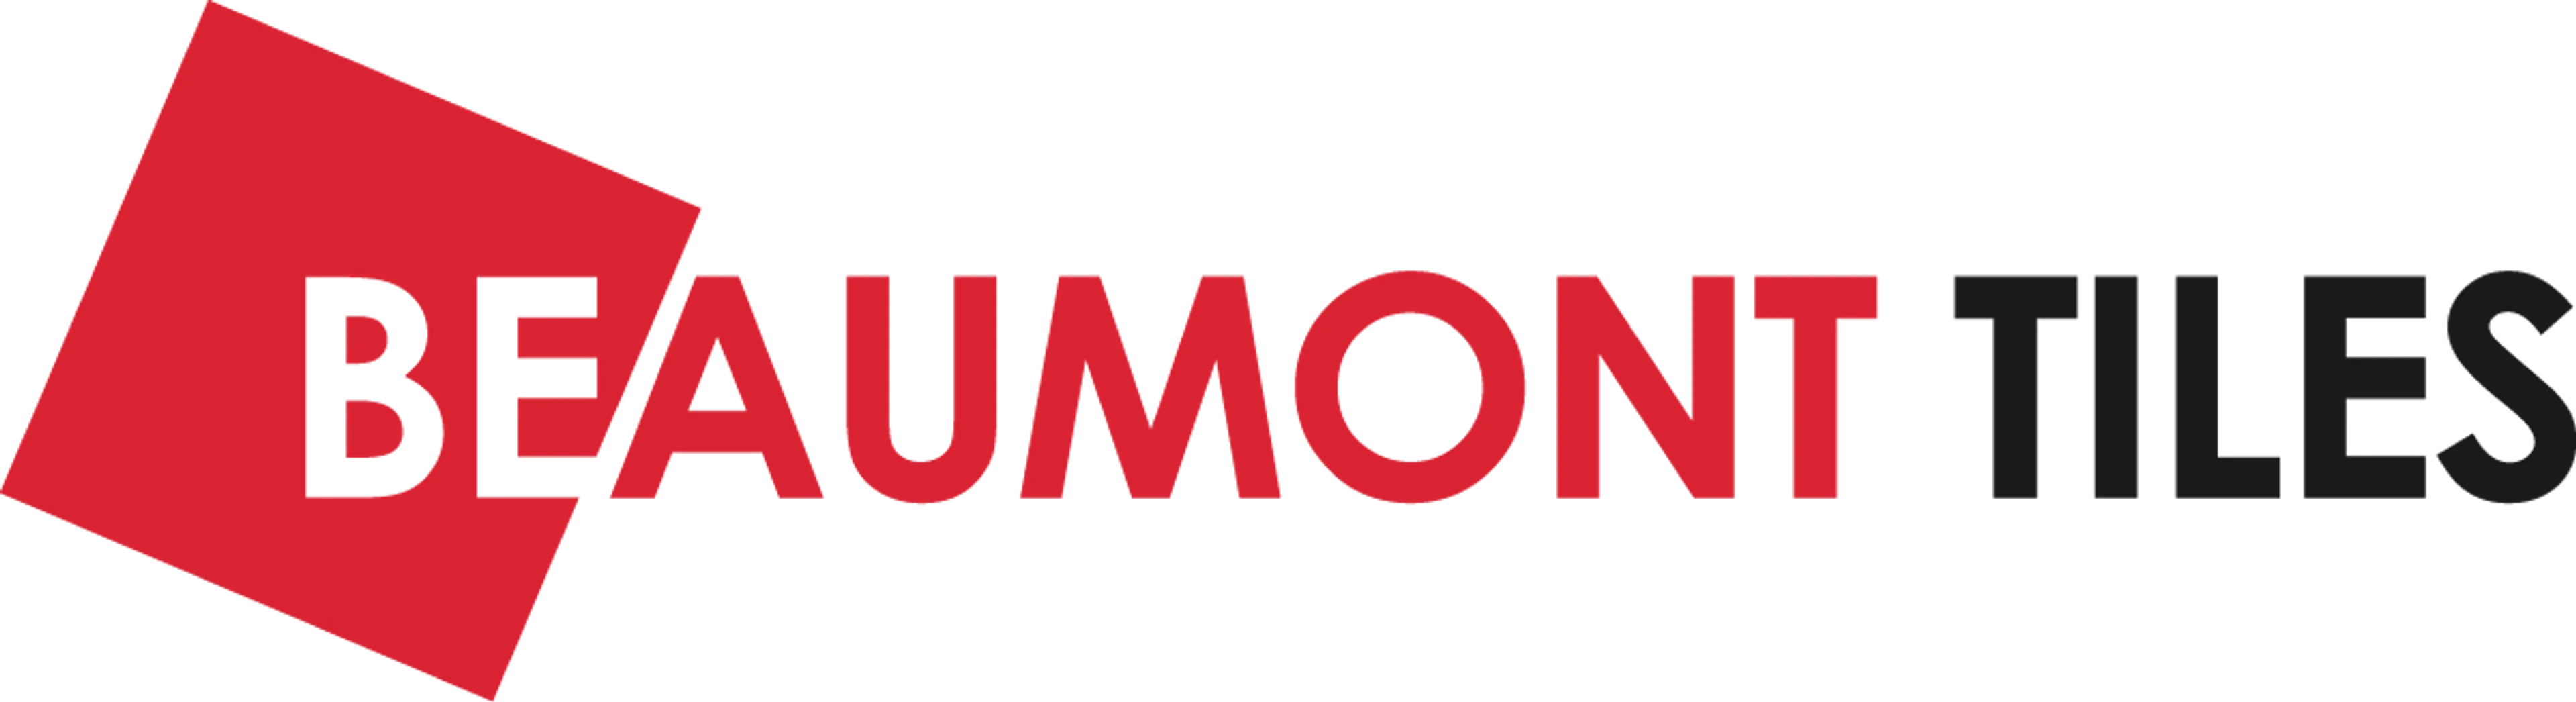 BEAUMONT TILES logo